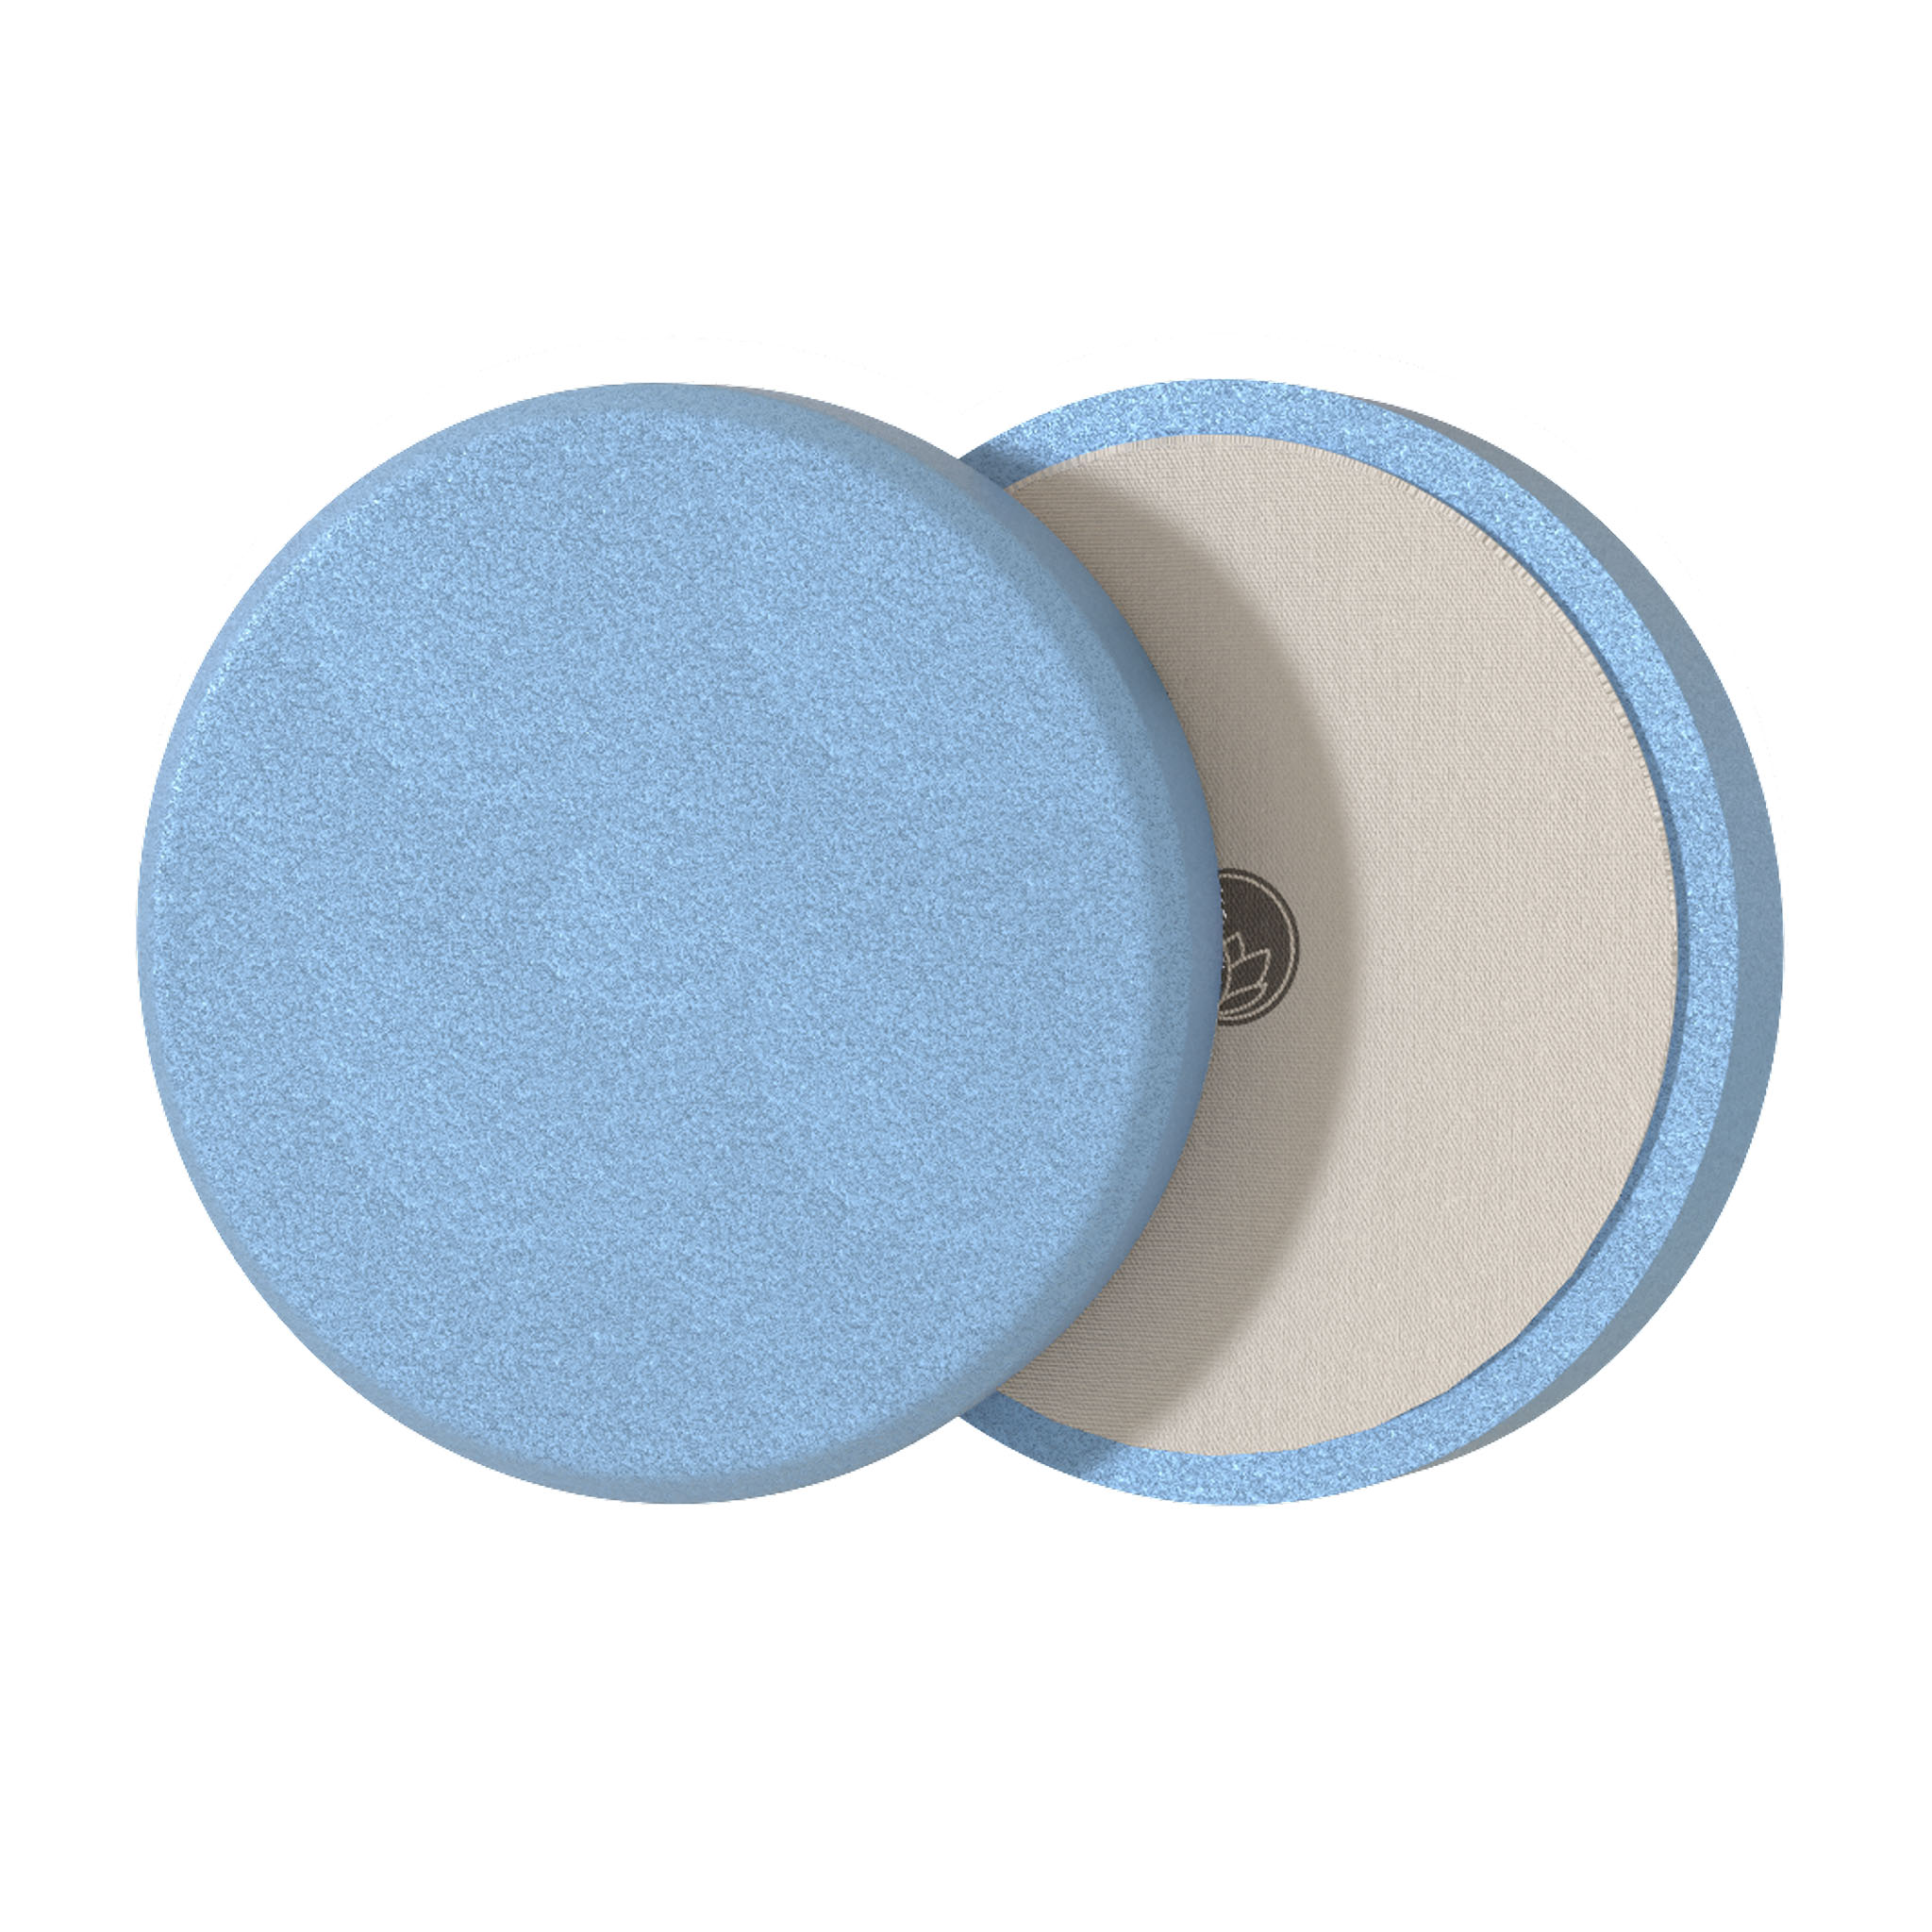 Skumrondell Nanolex Polishing Pad Medium/Thermo, Blå, 150 x 25 mm, 2 st